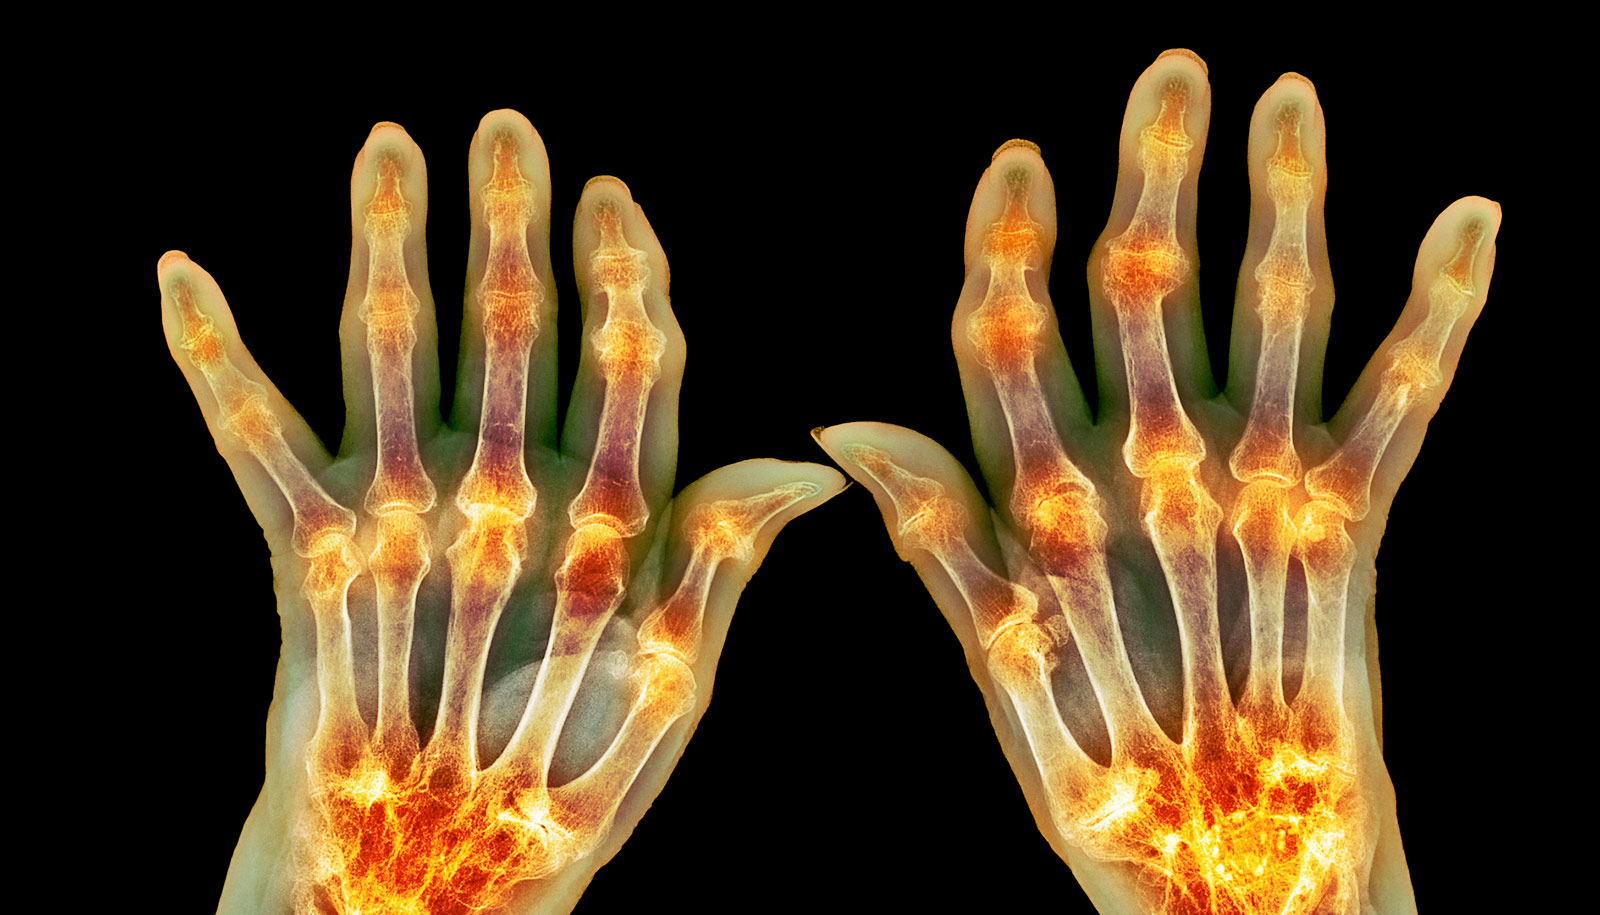 These cells spike before rheumatoid arthritis flare